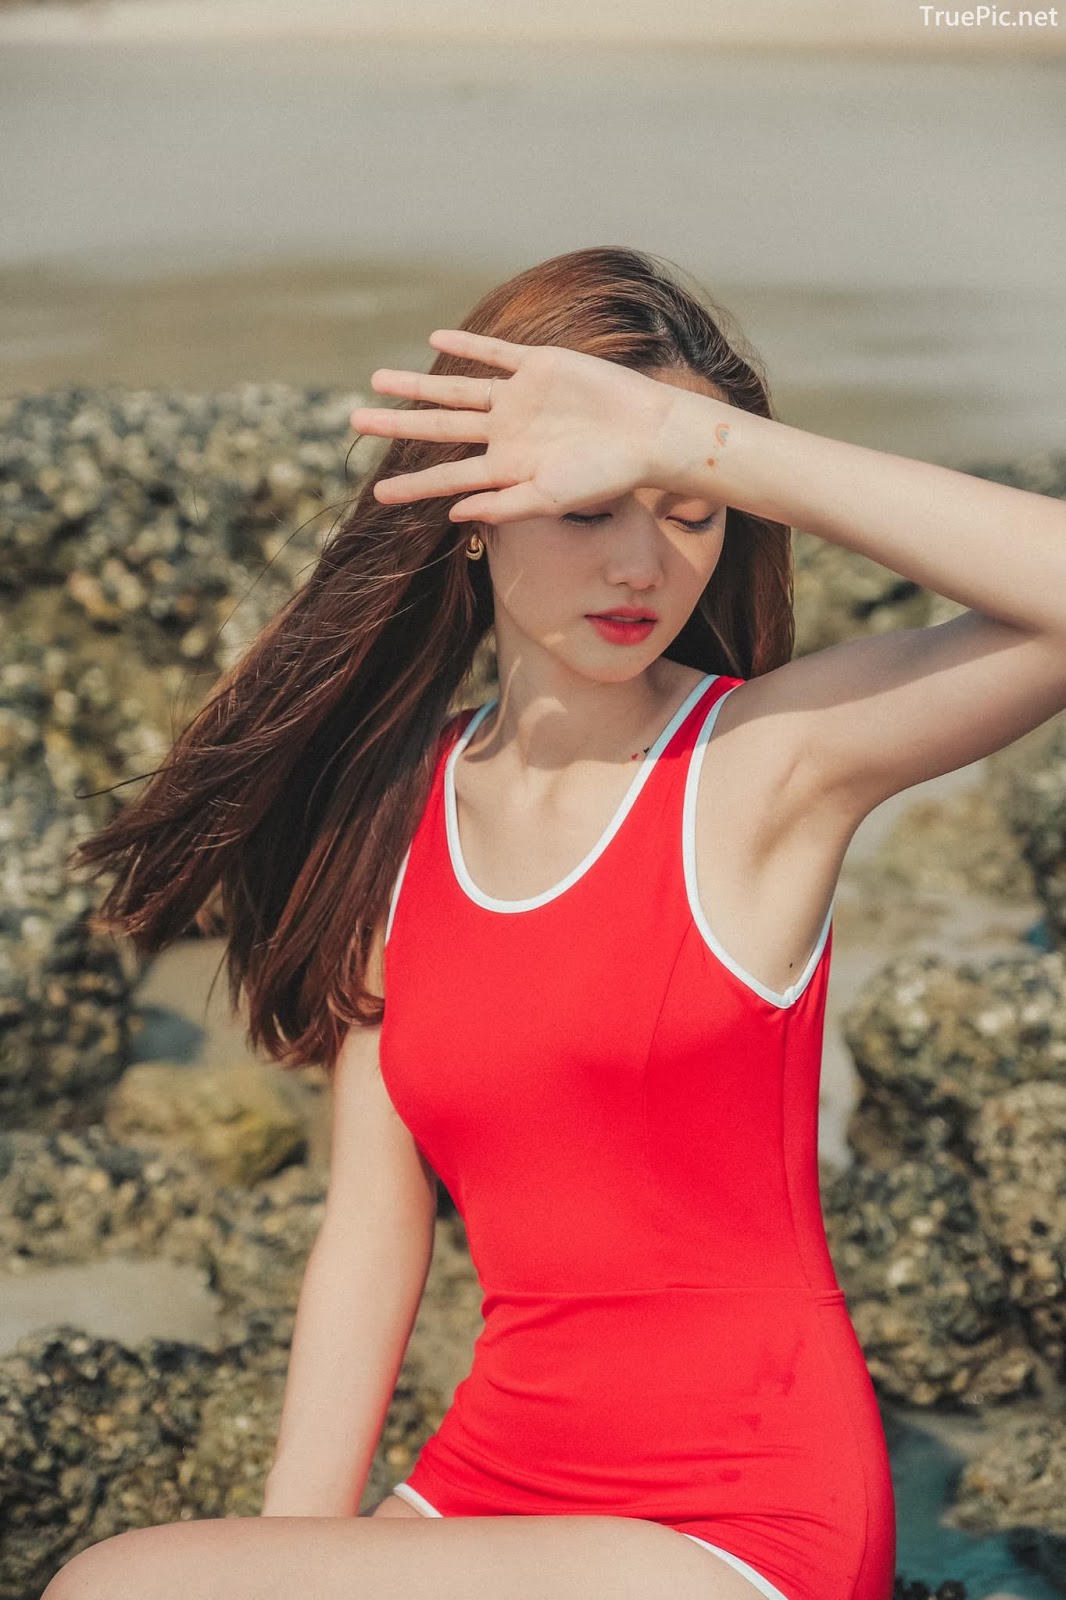 Miss Teen Thailand - Kanyarat Ruangrung - The Red Monokini On The Beach - TruePic.net - Picture 21